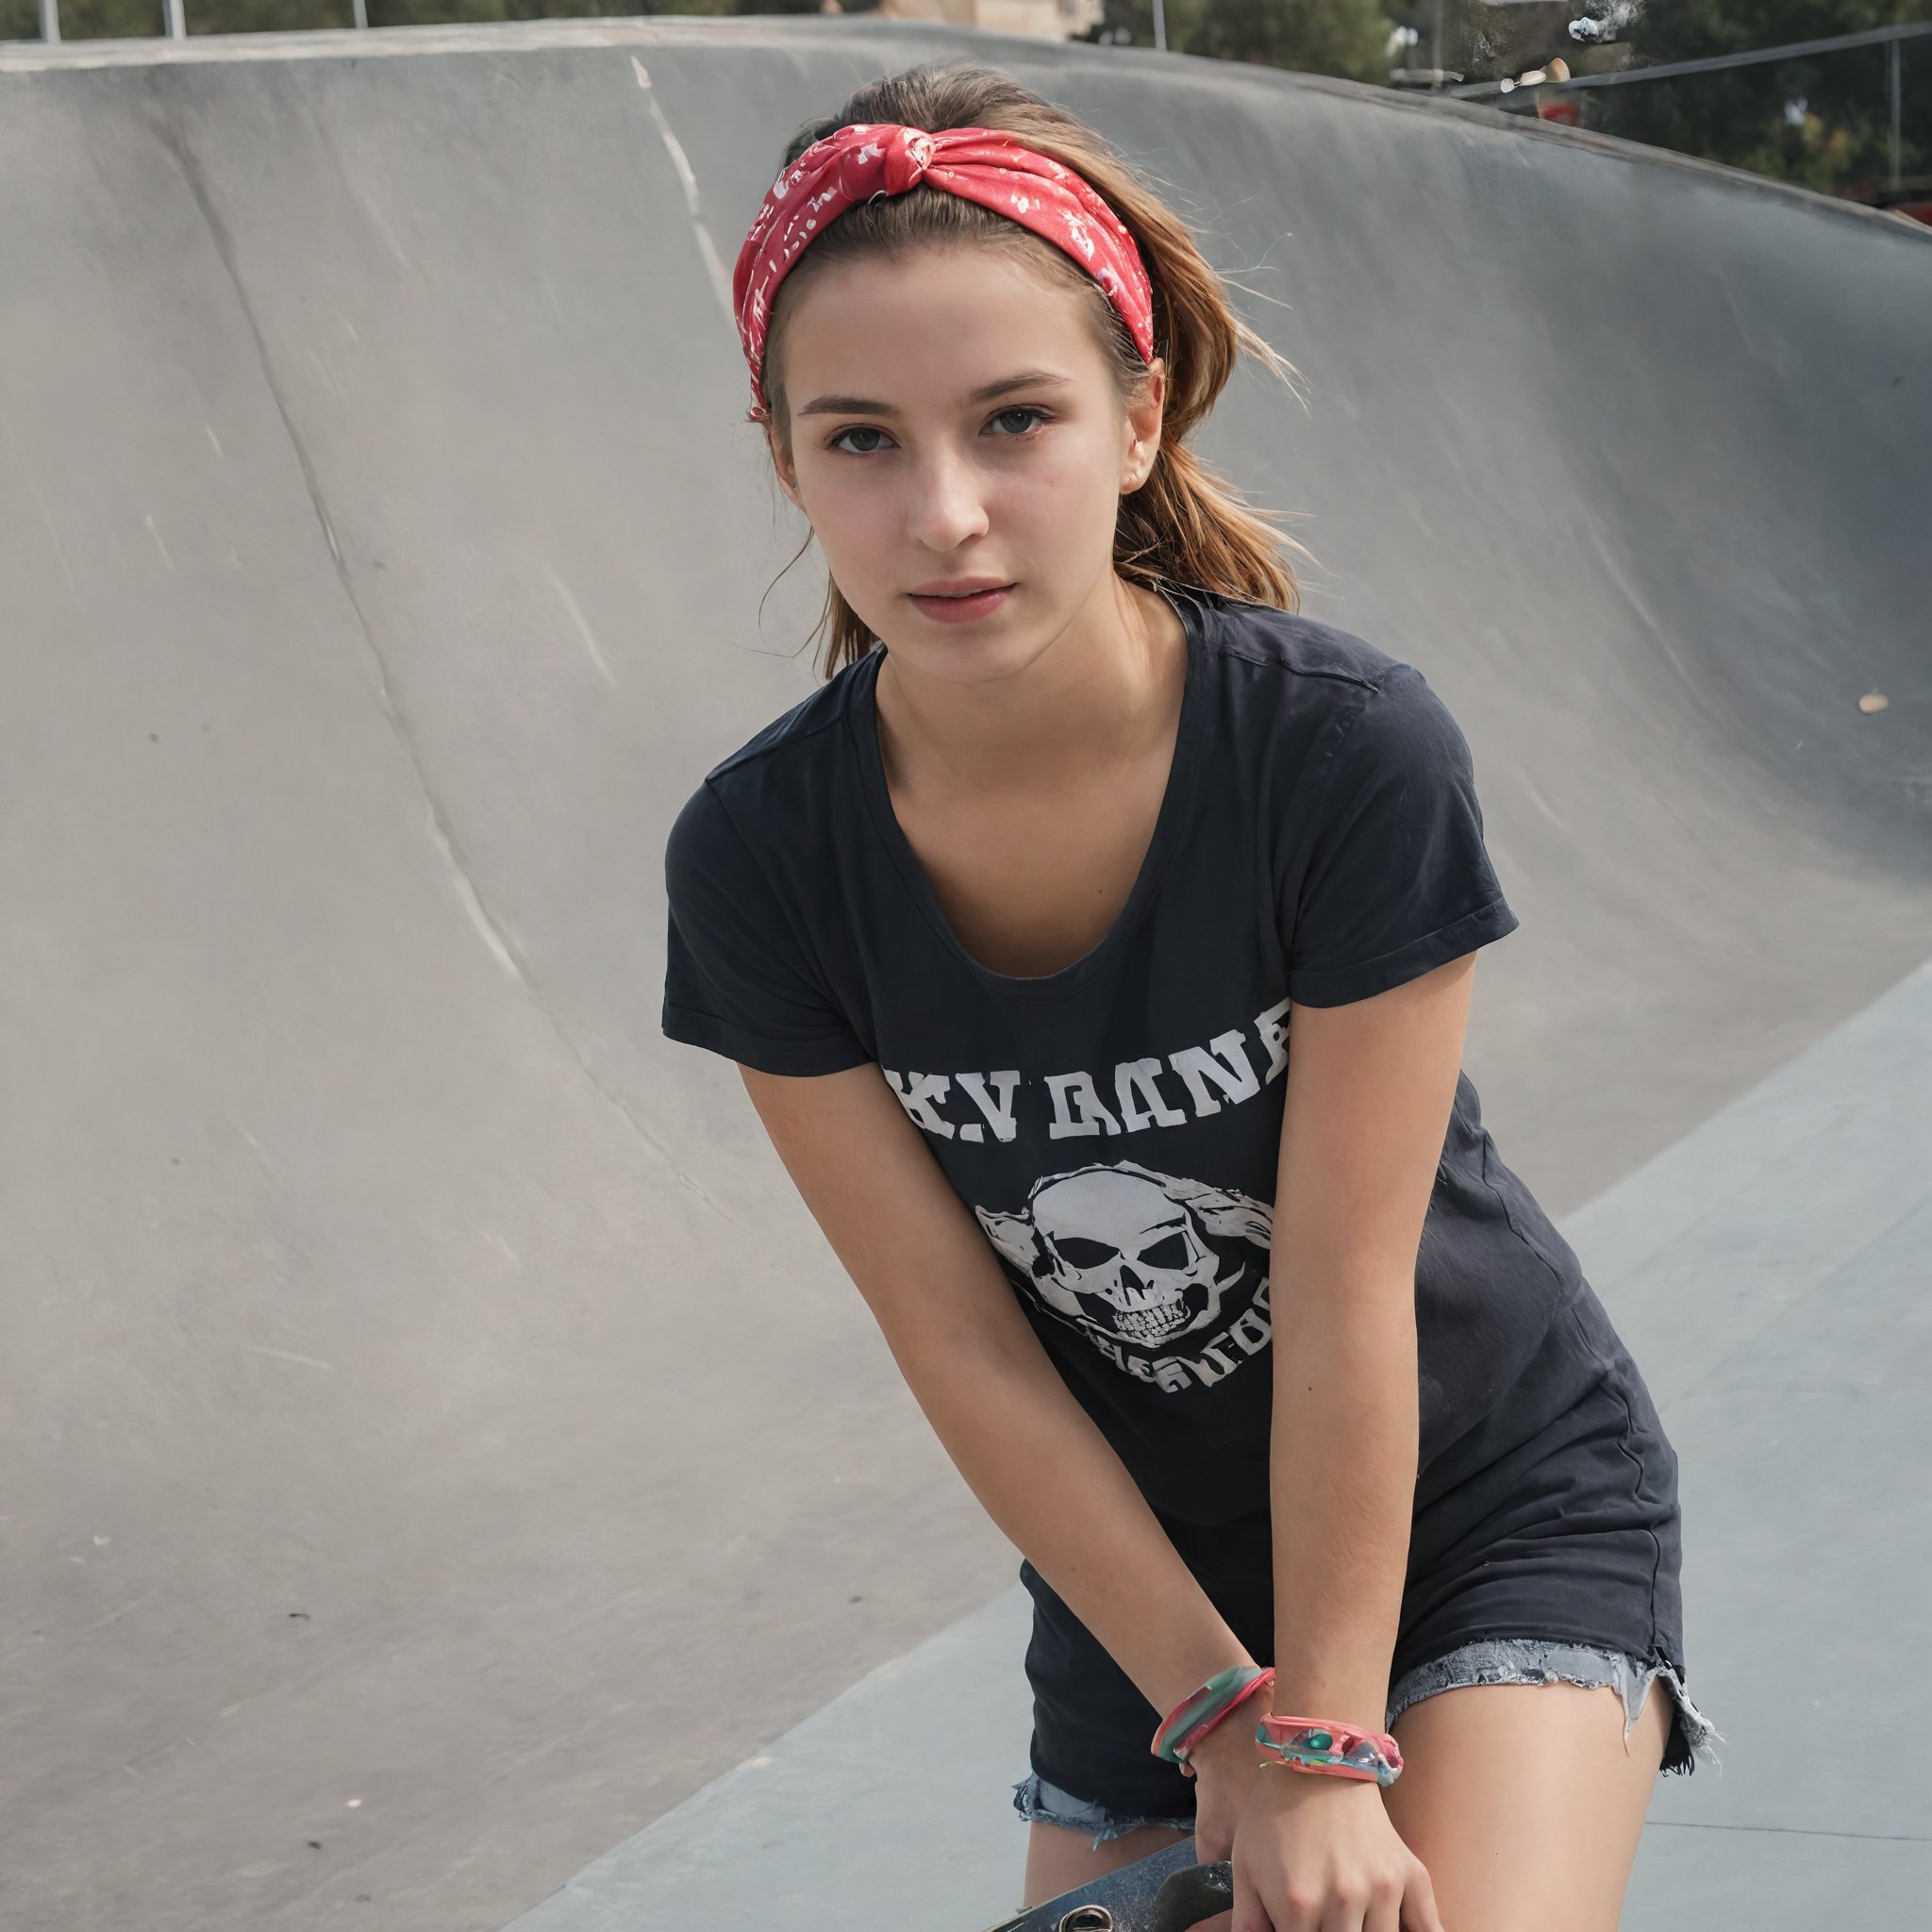 portrait of a skater girl, sk8ter girl, Casual, cool, rebellious, skateboard-toting, street-smart, athletic, independent, trendy, daring, bandana, mid riff, back ground skate park